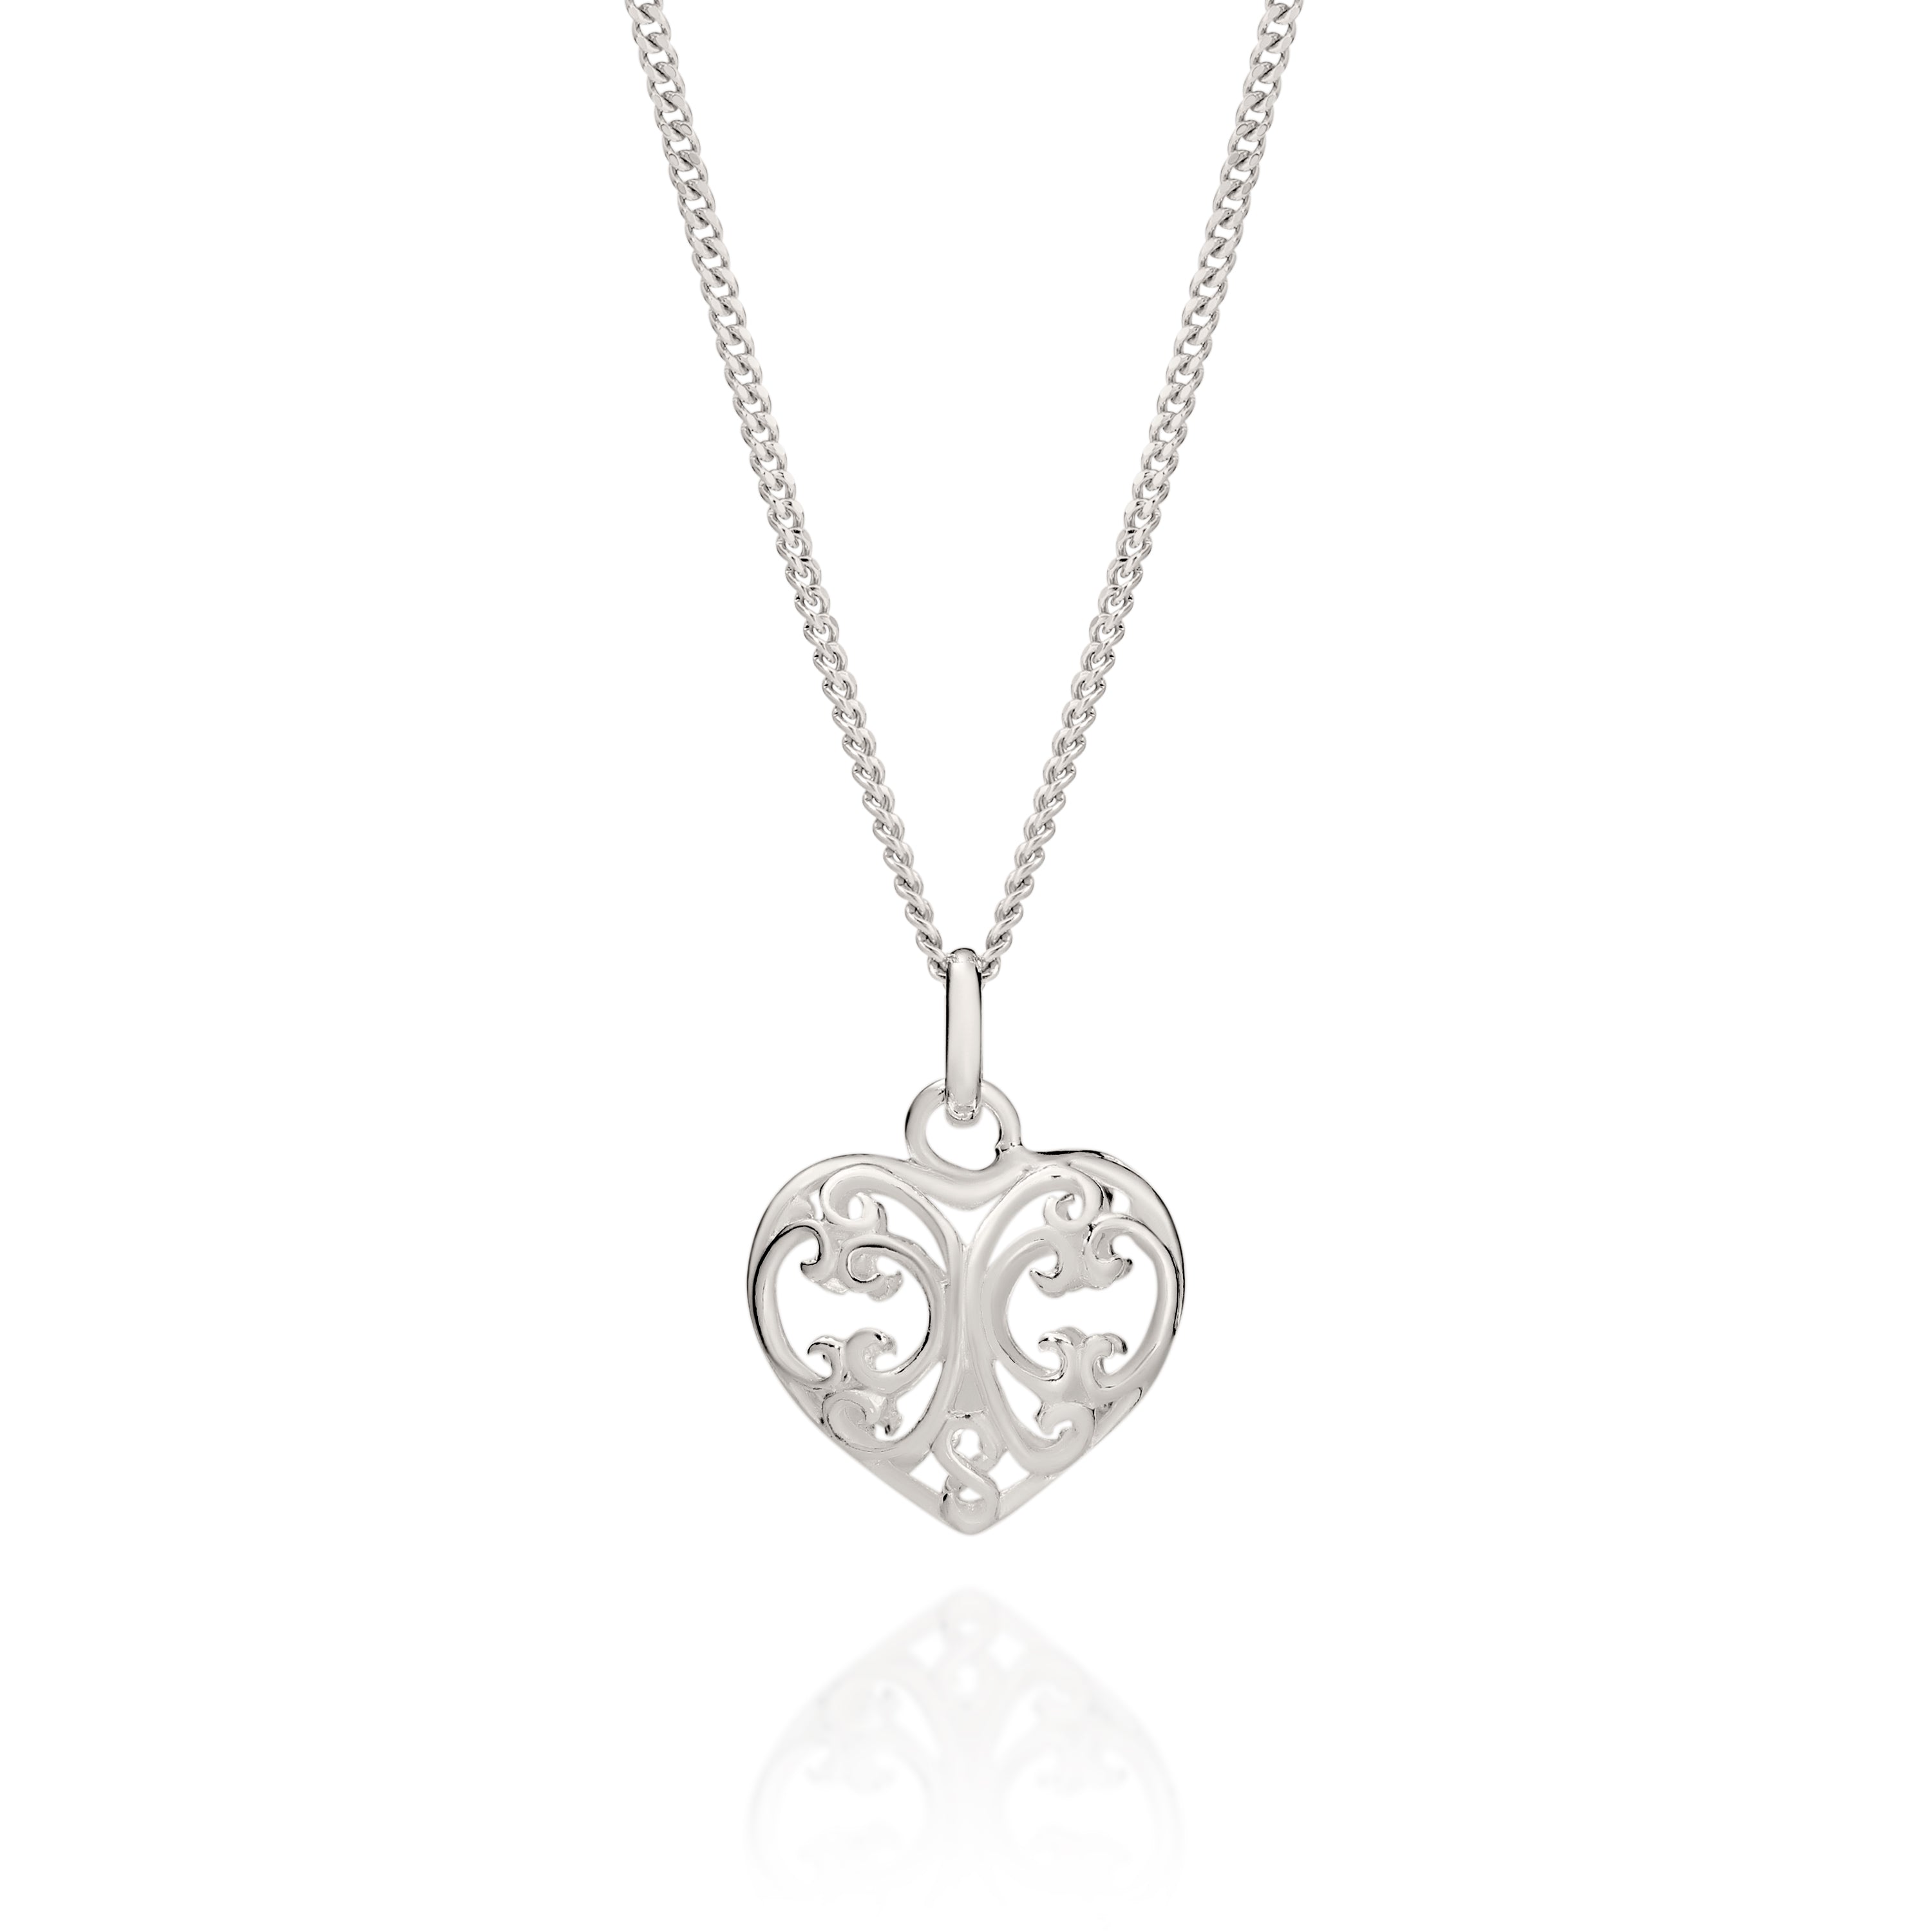 Silver filigree puffed heart pendant